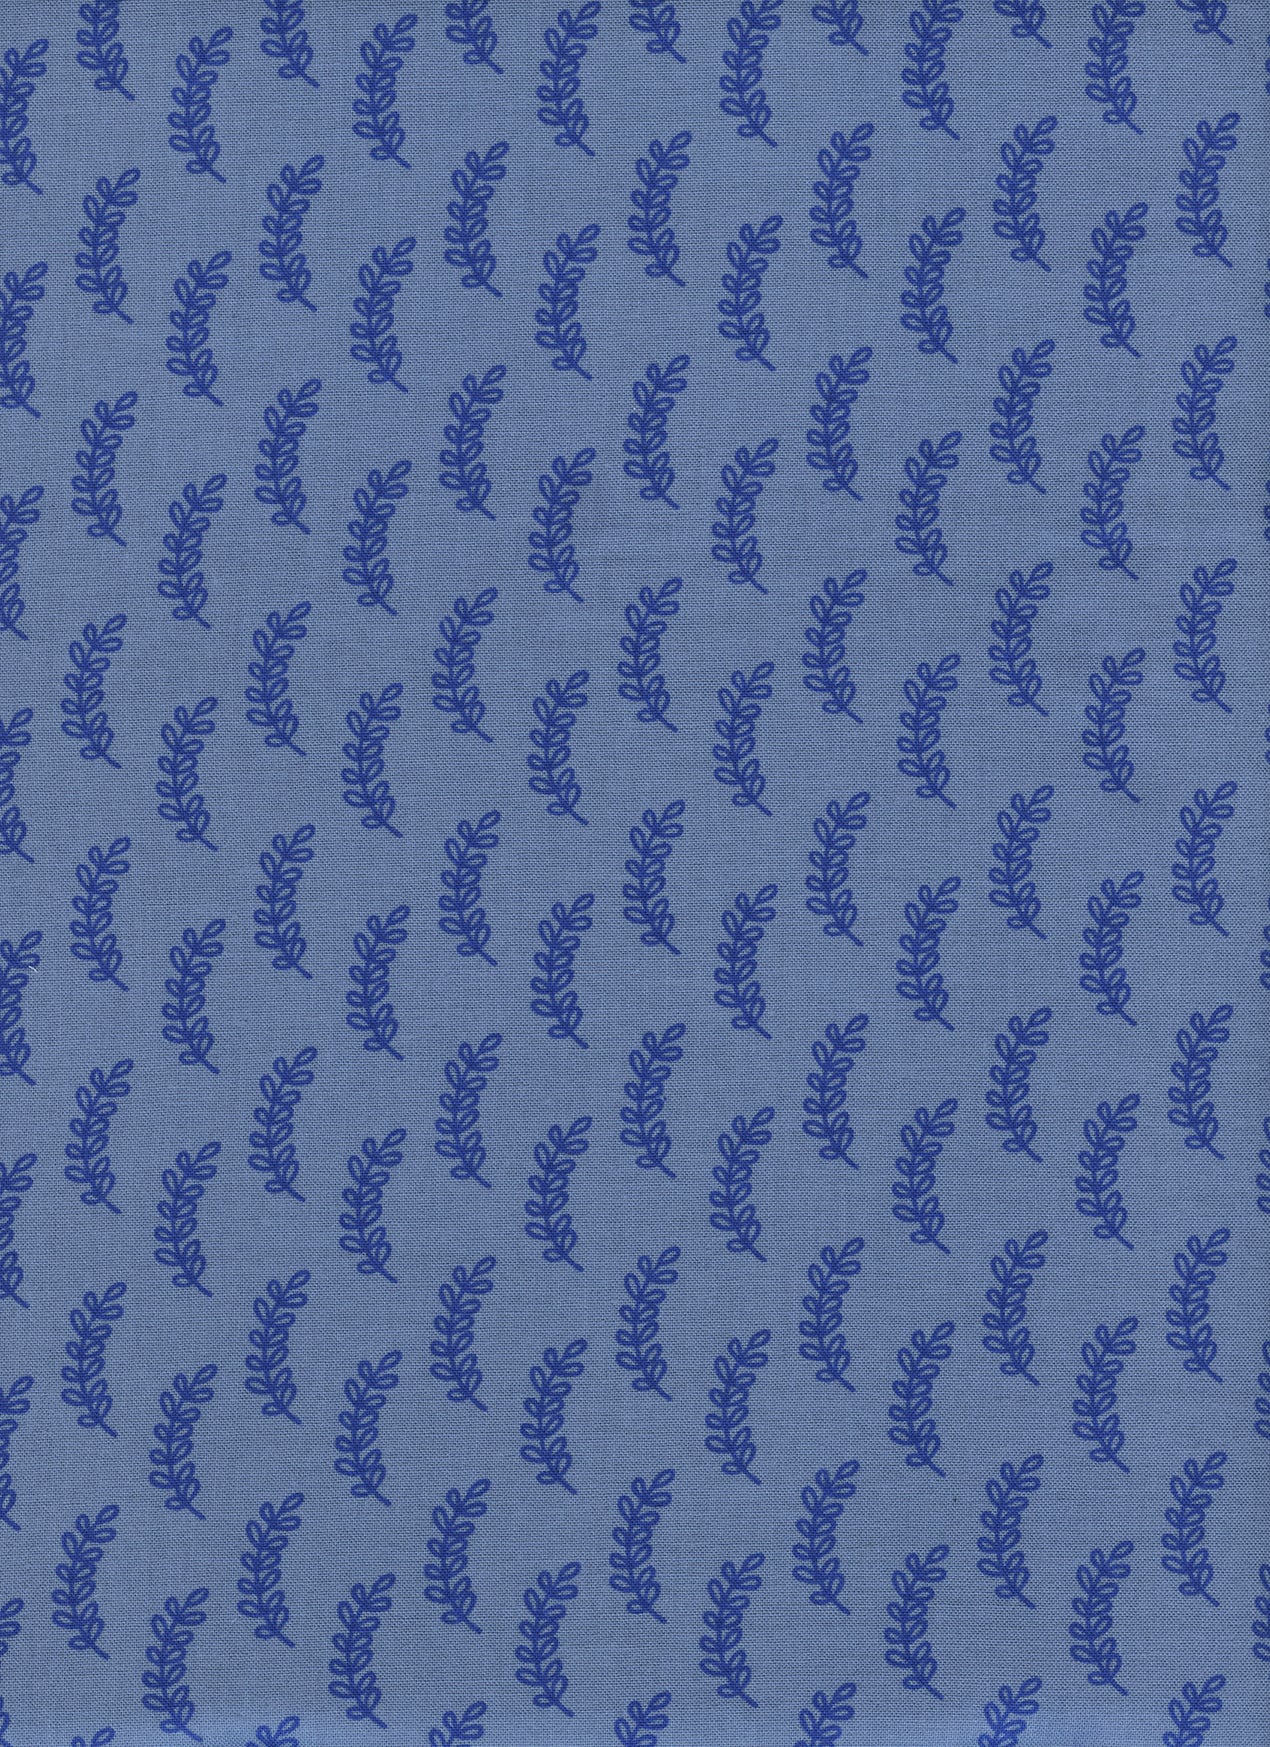 C+S  Bluebird - Leaflet - Blue Fabric